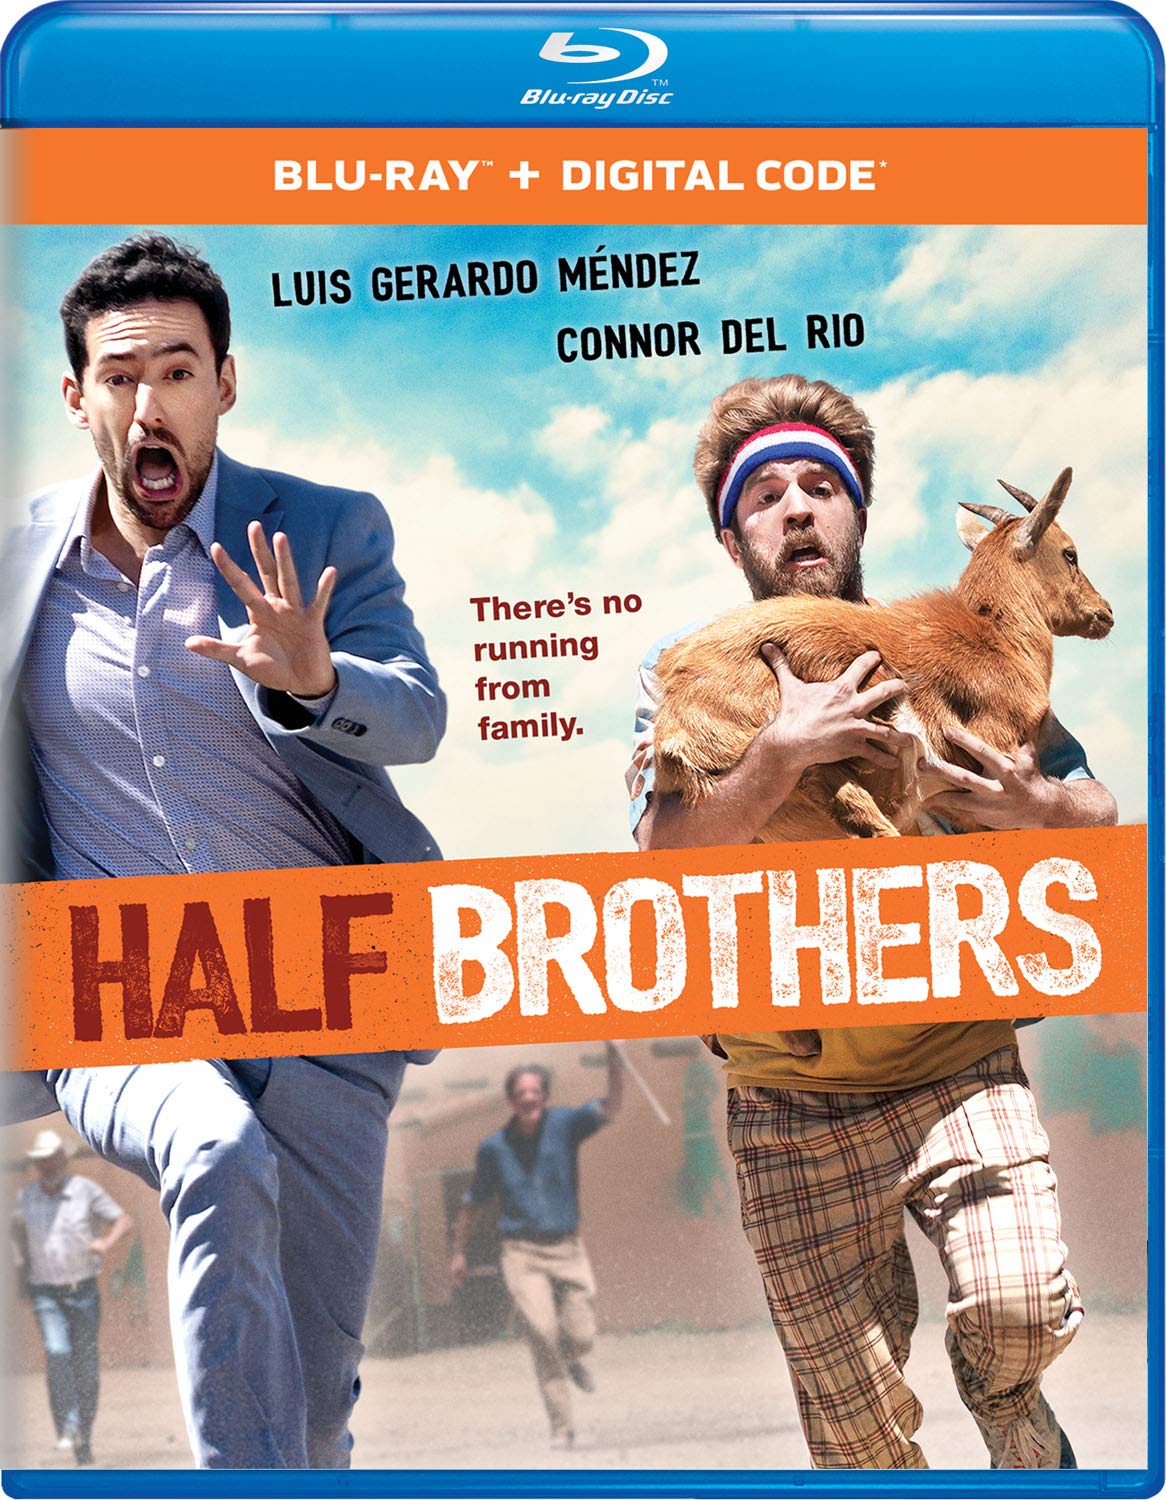 Half brothers (2020) Луис Херардо Мендес. Сводные братья half brothers. Half brother